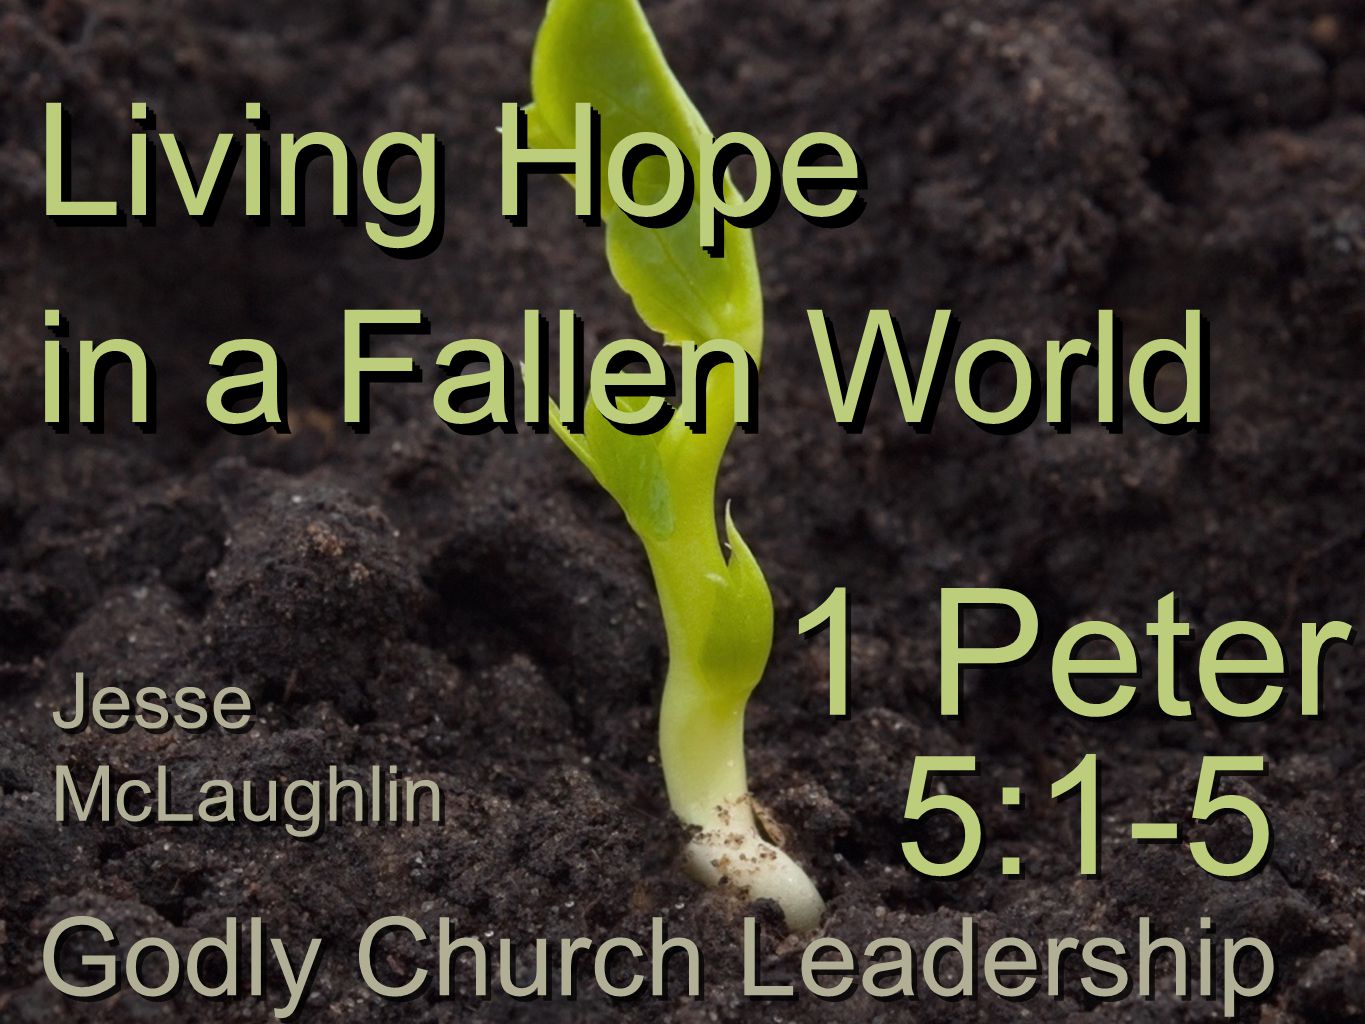 Living Hope in a Fallen World 1 Peter Living Hope in a Fallen World Godly Church Leadership 5:1-5 Jesse McLaughlin